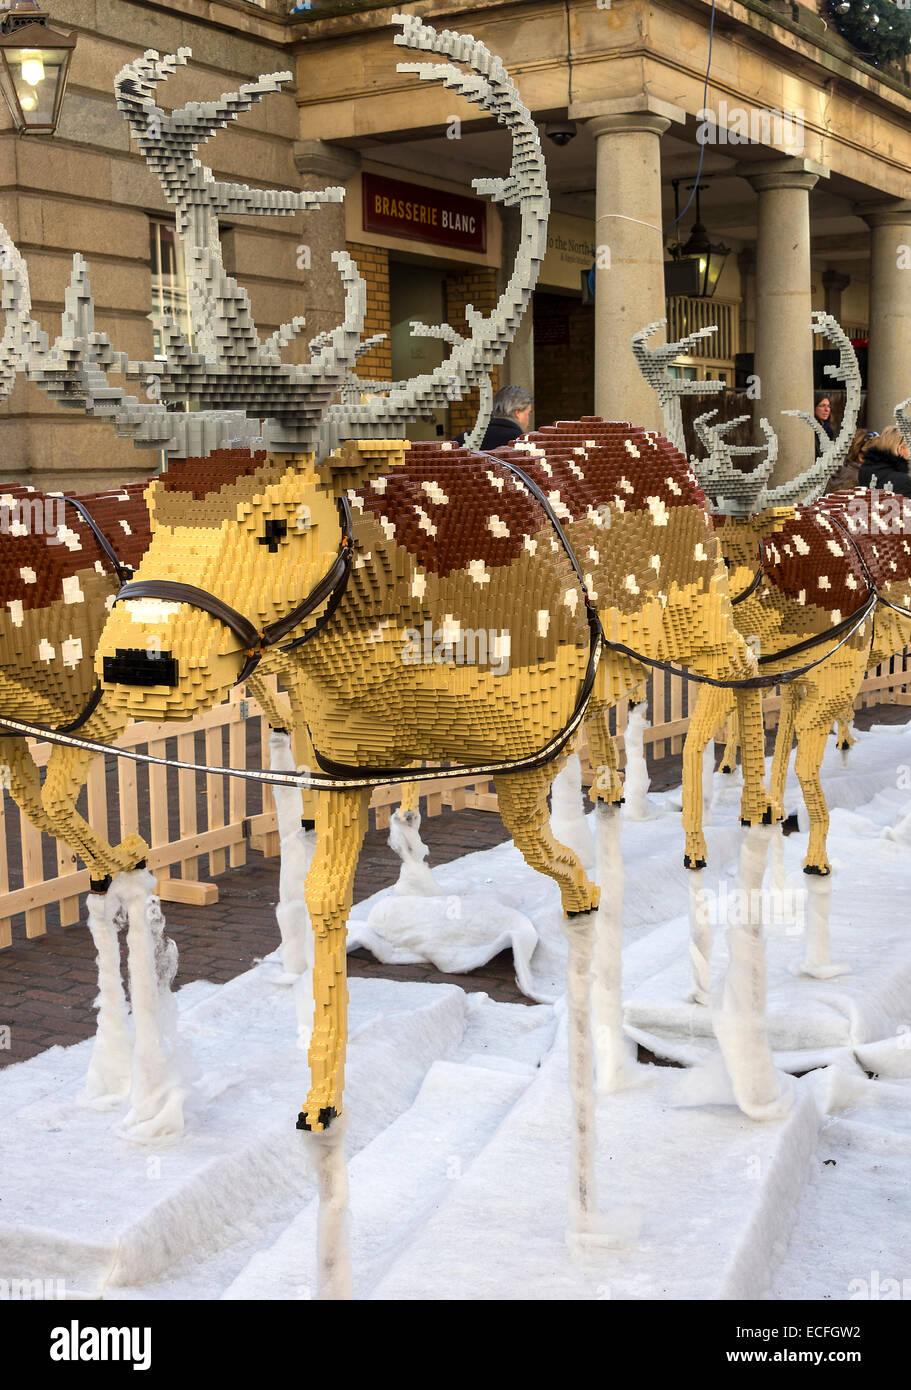 A Large Christmas Display of Reindeer Made of Lego Bricks Outside Covent Garden Market London England United Kingdom UK Stock Photo